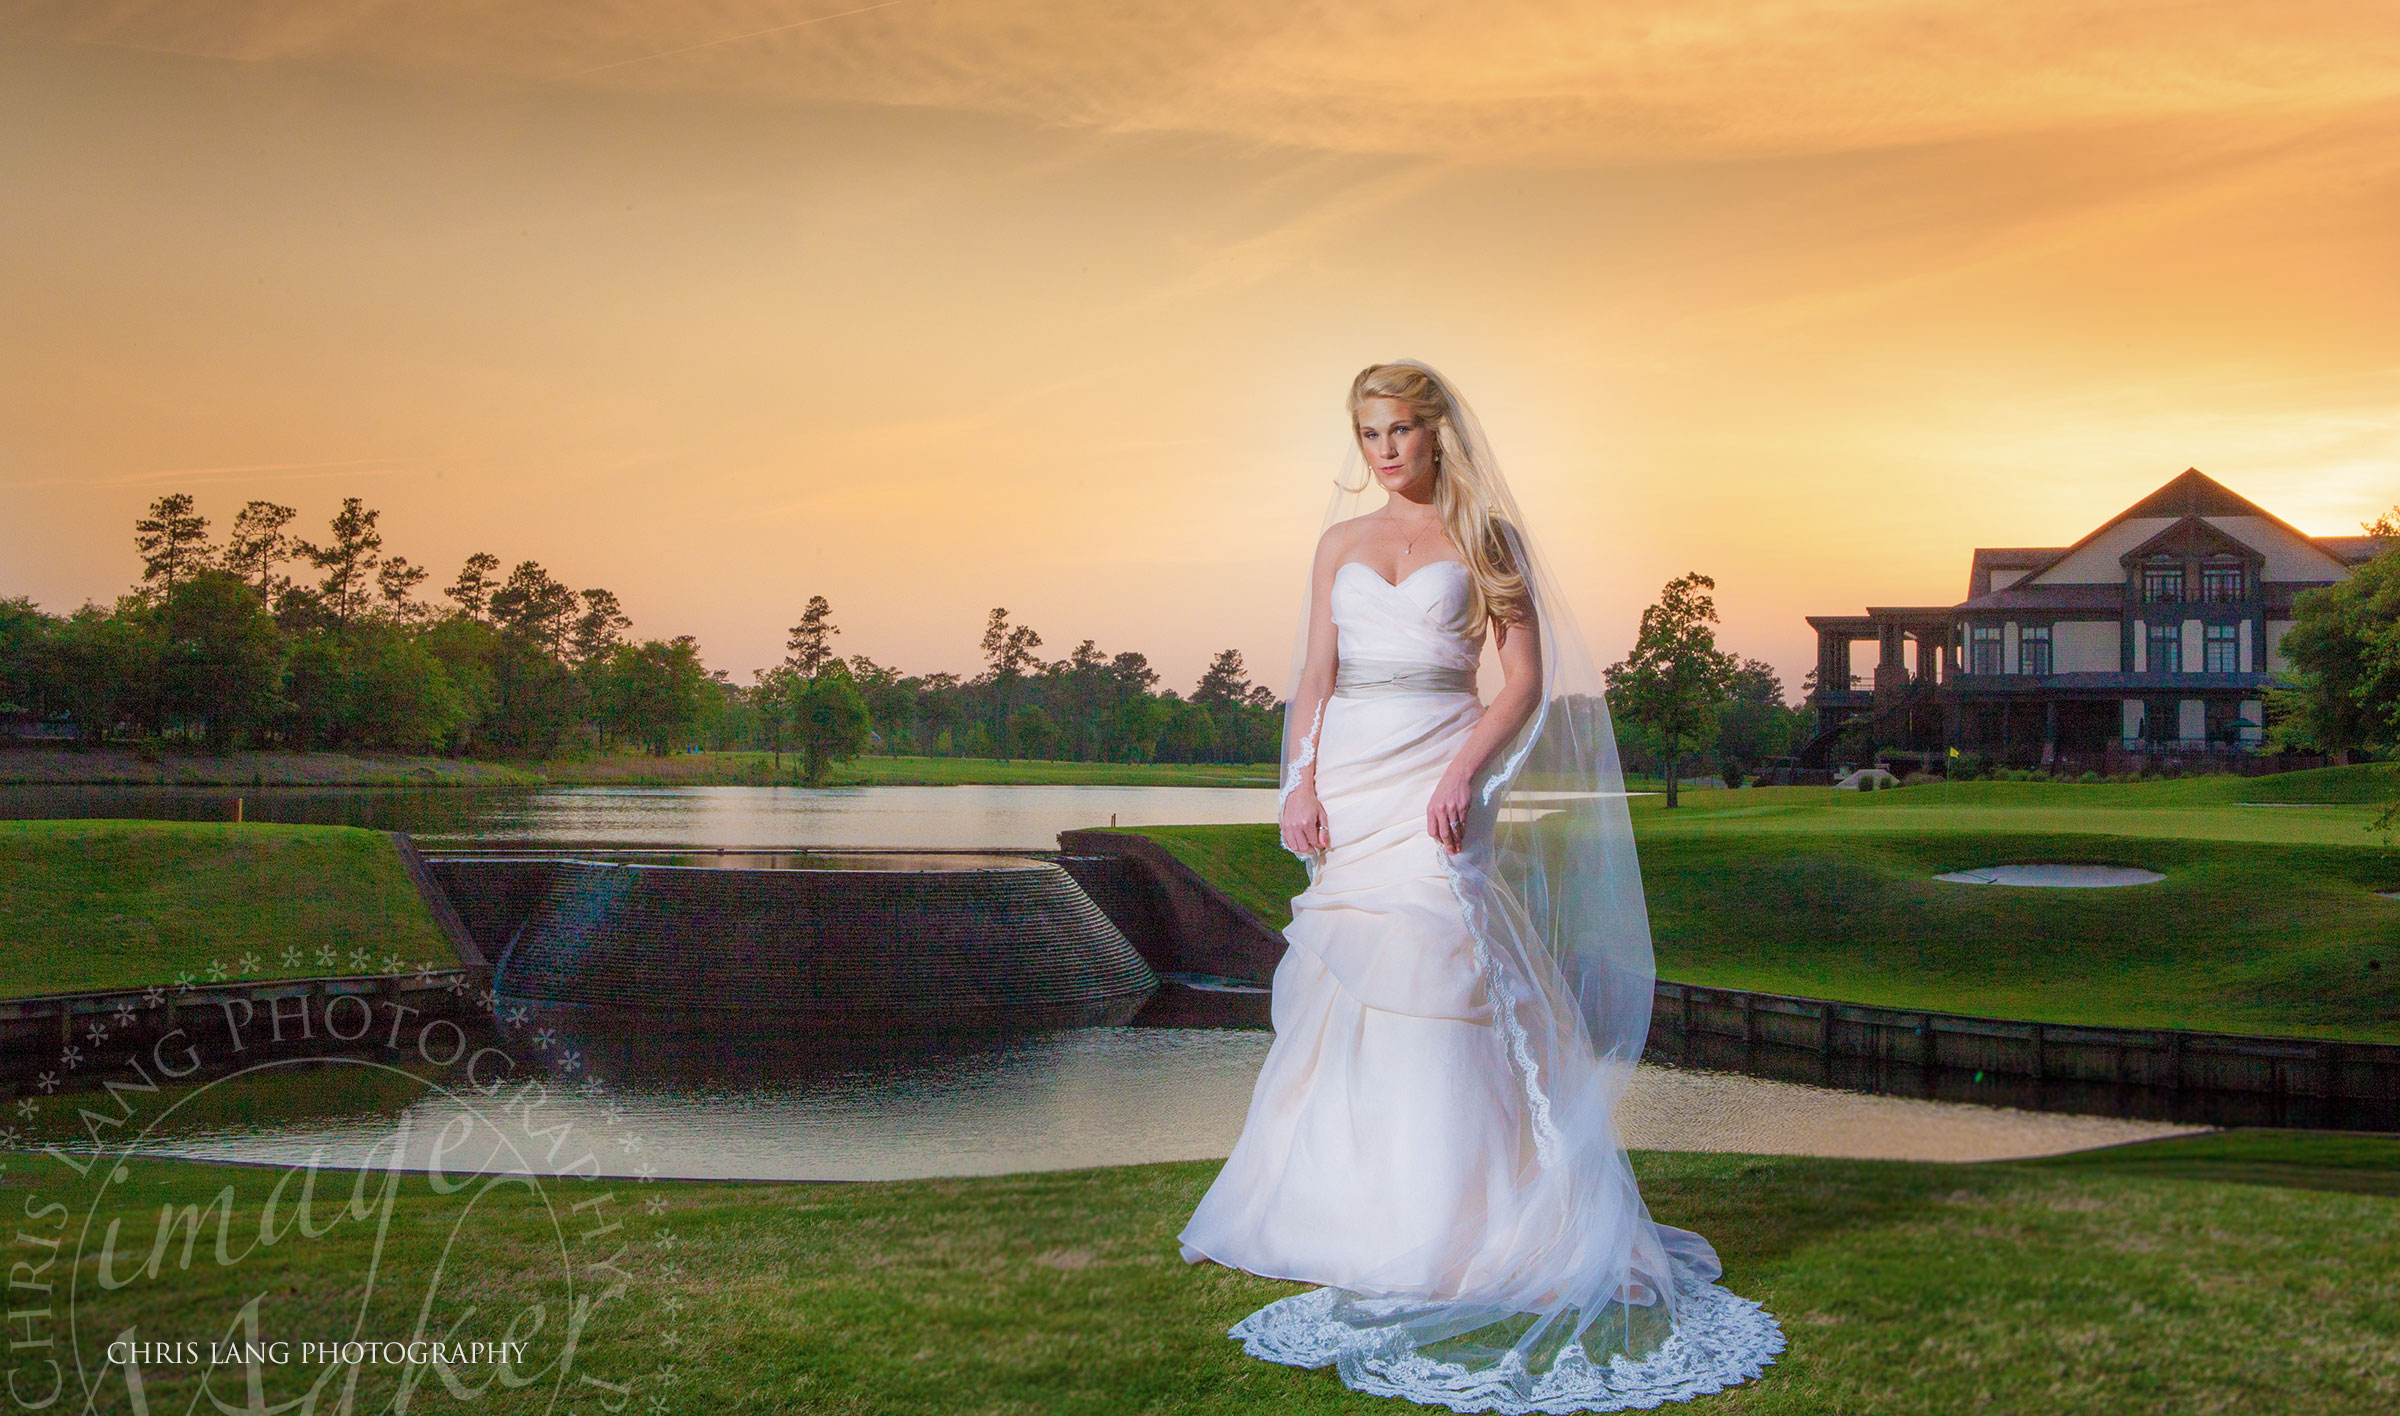 River Landing Weddings - Wedding Photography at the covered bridge - Chris Lang Photography